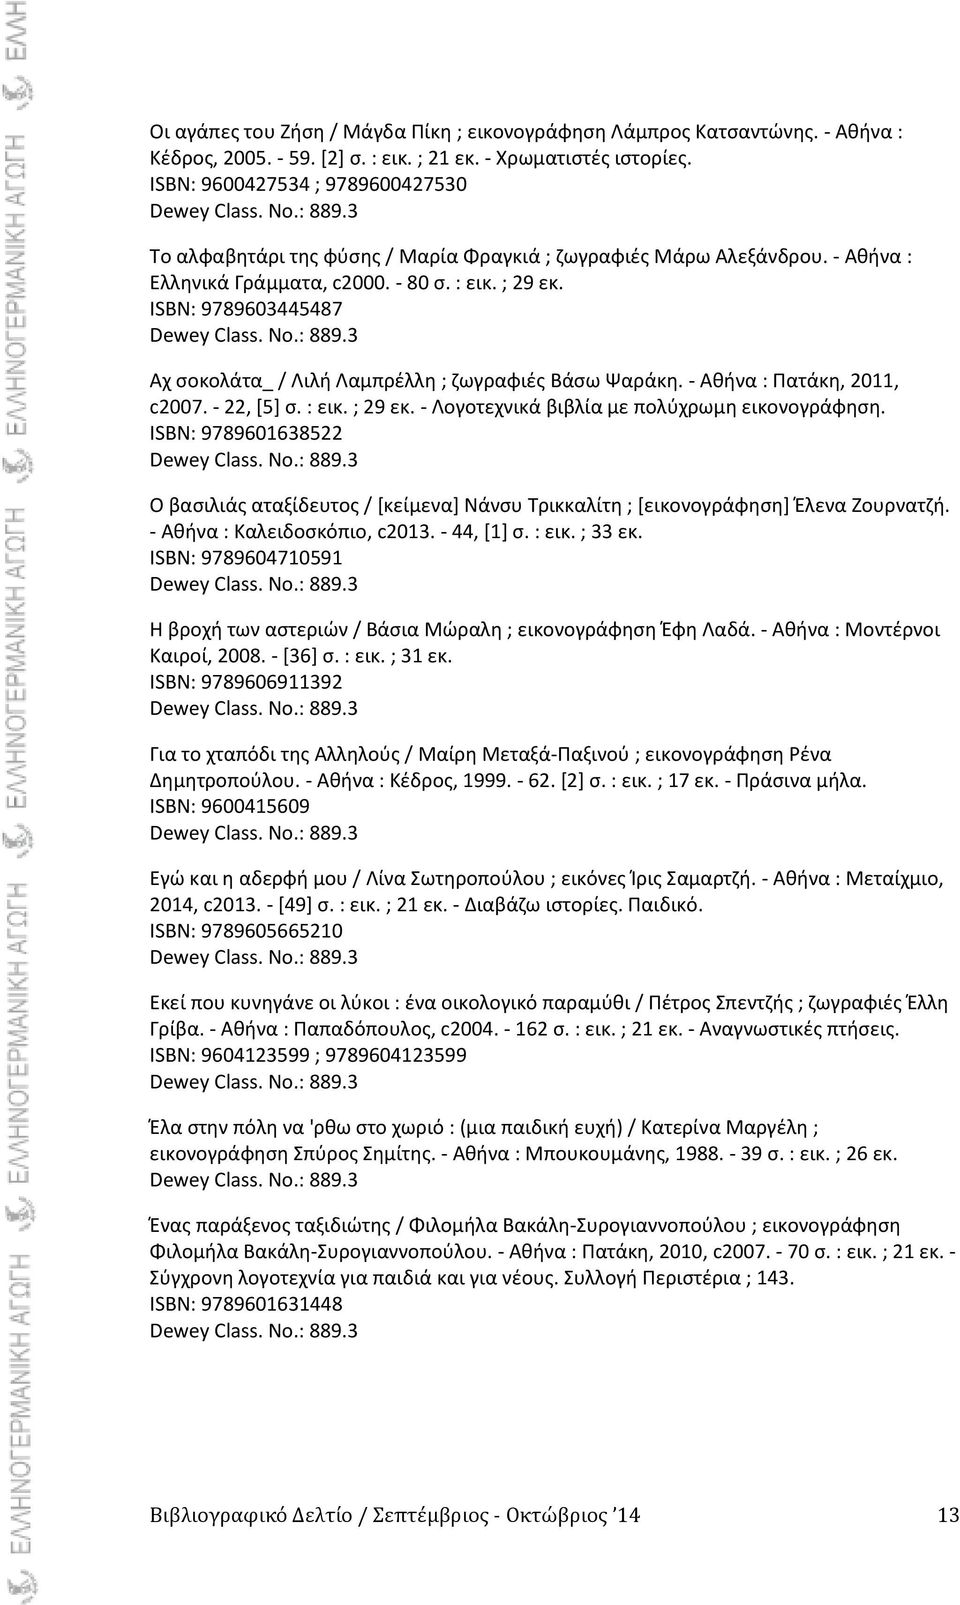 ISBN: 9789603445487 Αχ ςοκολάτα_ / Λιλι Λαμπρζλλθ ; ηωγραφιζσ Βάςω Ψαράκθ. - Ακινα : Ρατάκθ, 2011, c2007. - 22, *5+ ς. : εικ. ; 29 εκ. - Λογοτεχνικά βιβλία με πολφχρωμθ εικονογράφθςθ.